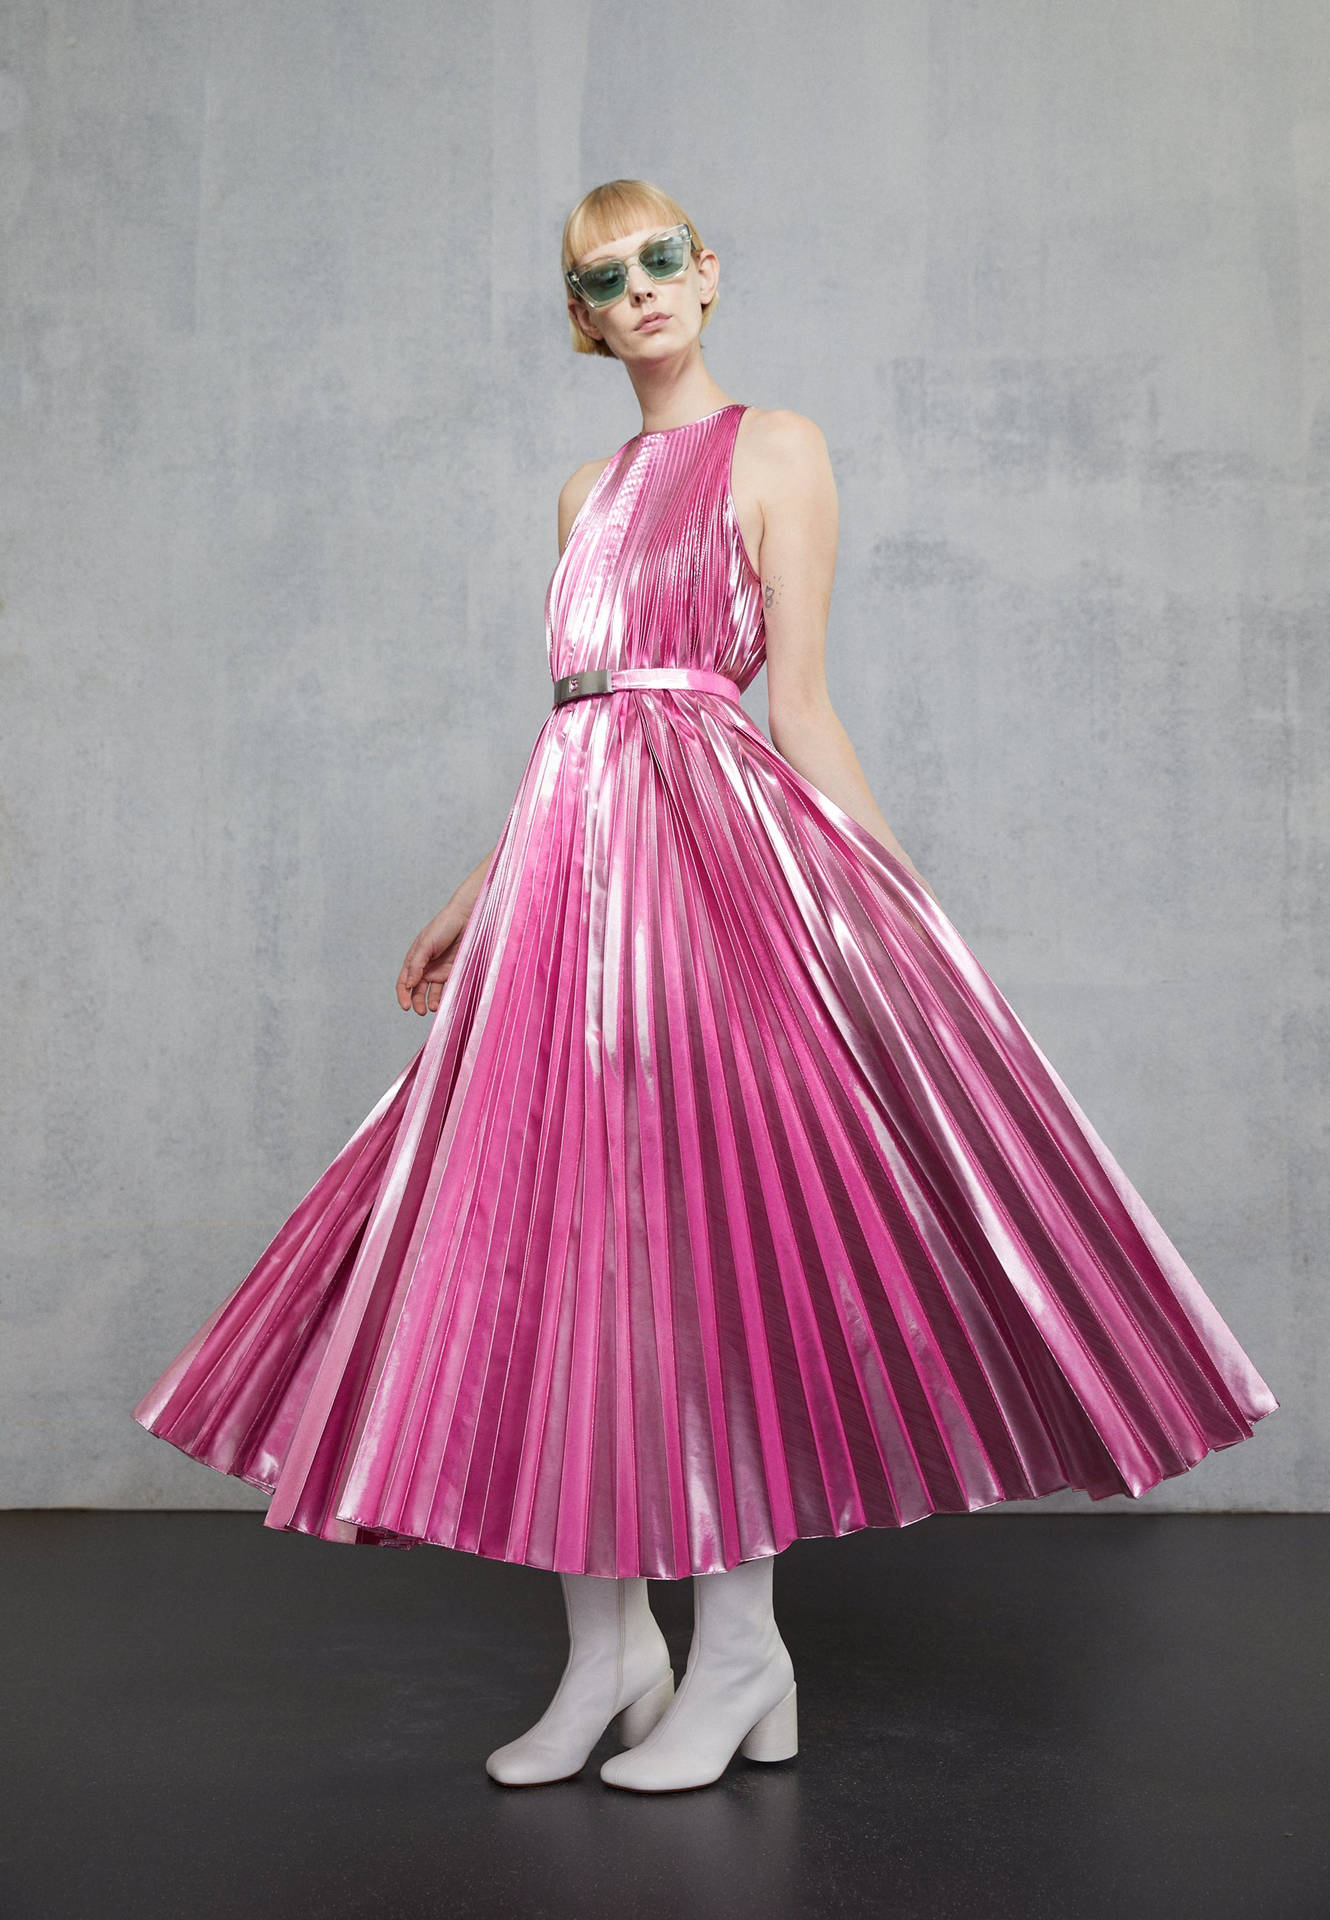 Christopher Kane Pink Pleated Flowy Dress Wallpaper